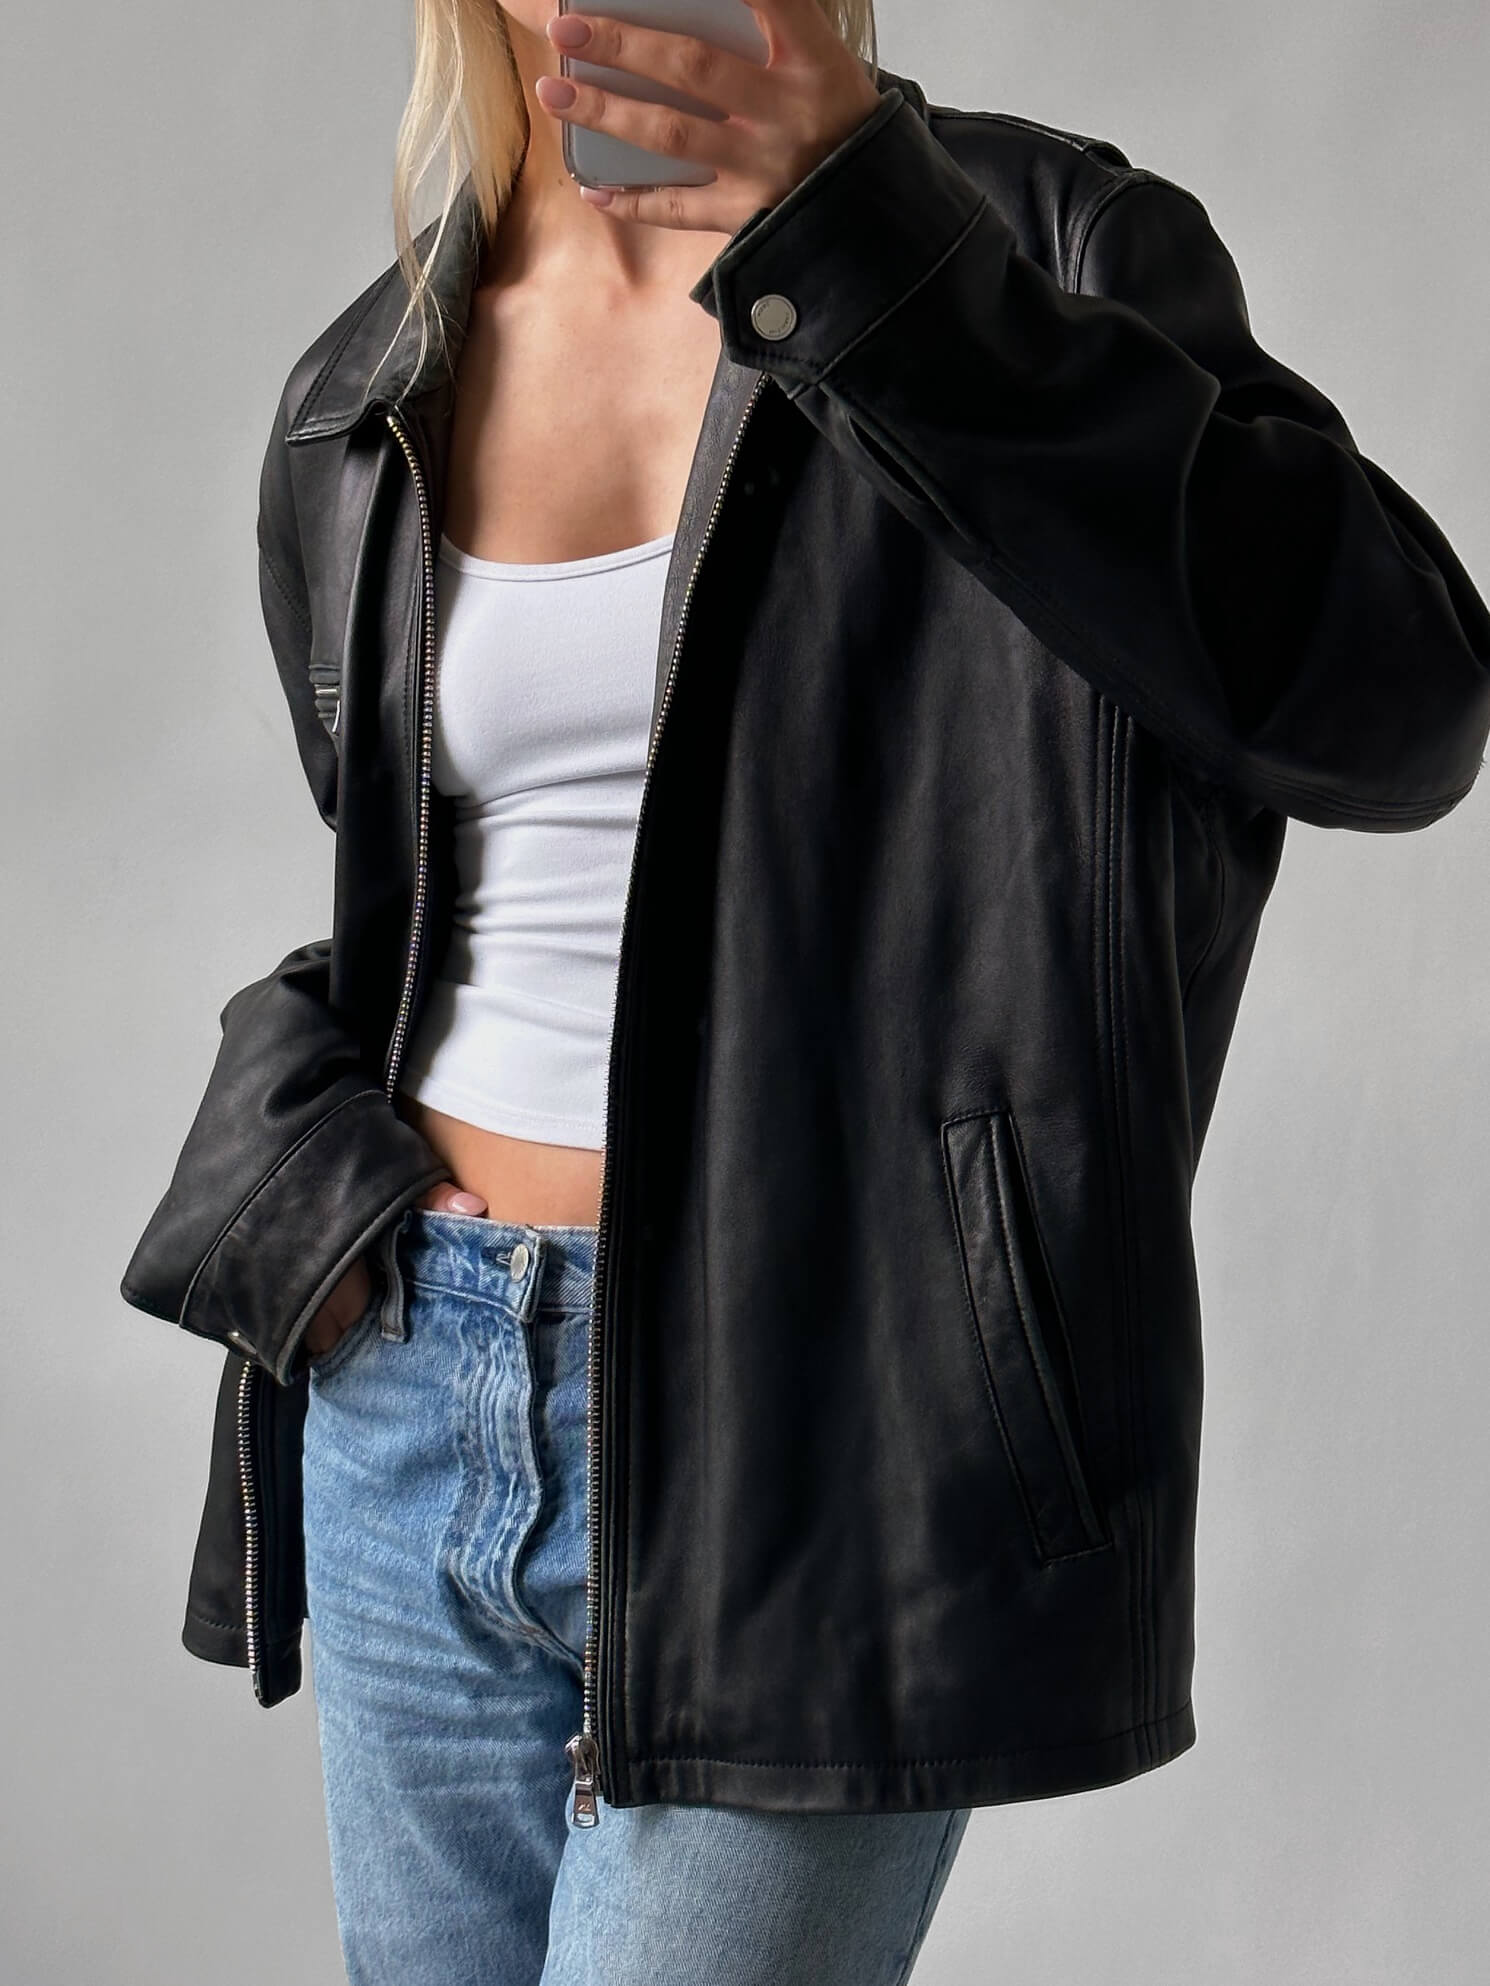 Retro MICHAEL KORS Oversized Patina Leather Jacket | XS-XXL